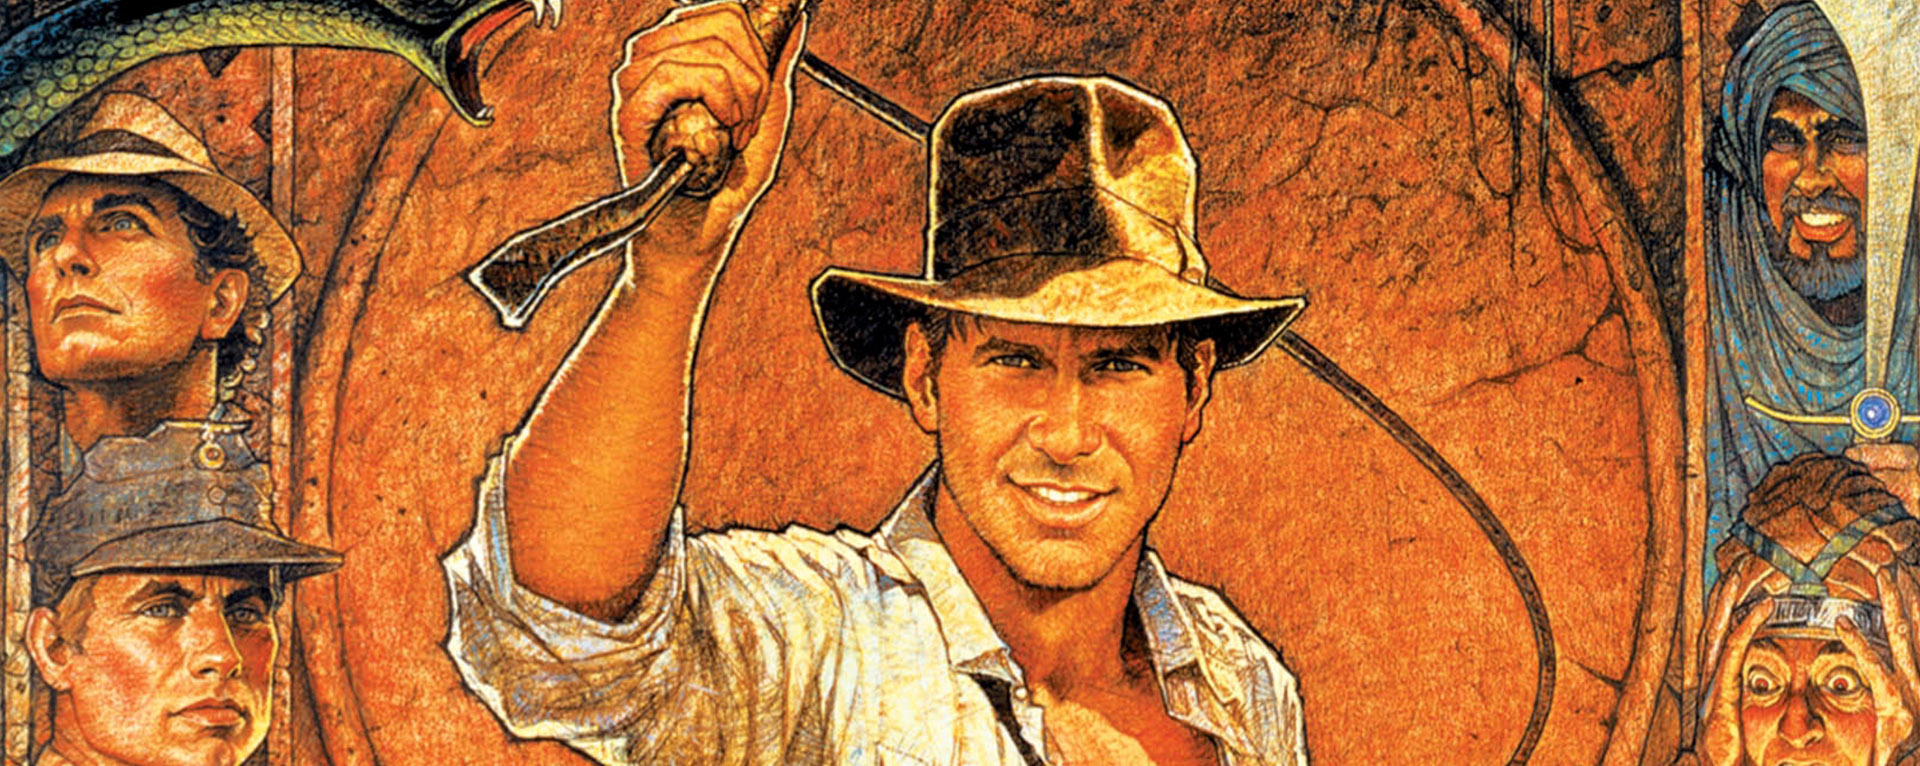 Indiana Jones Classics Available on 4K Ultra HD June 6